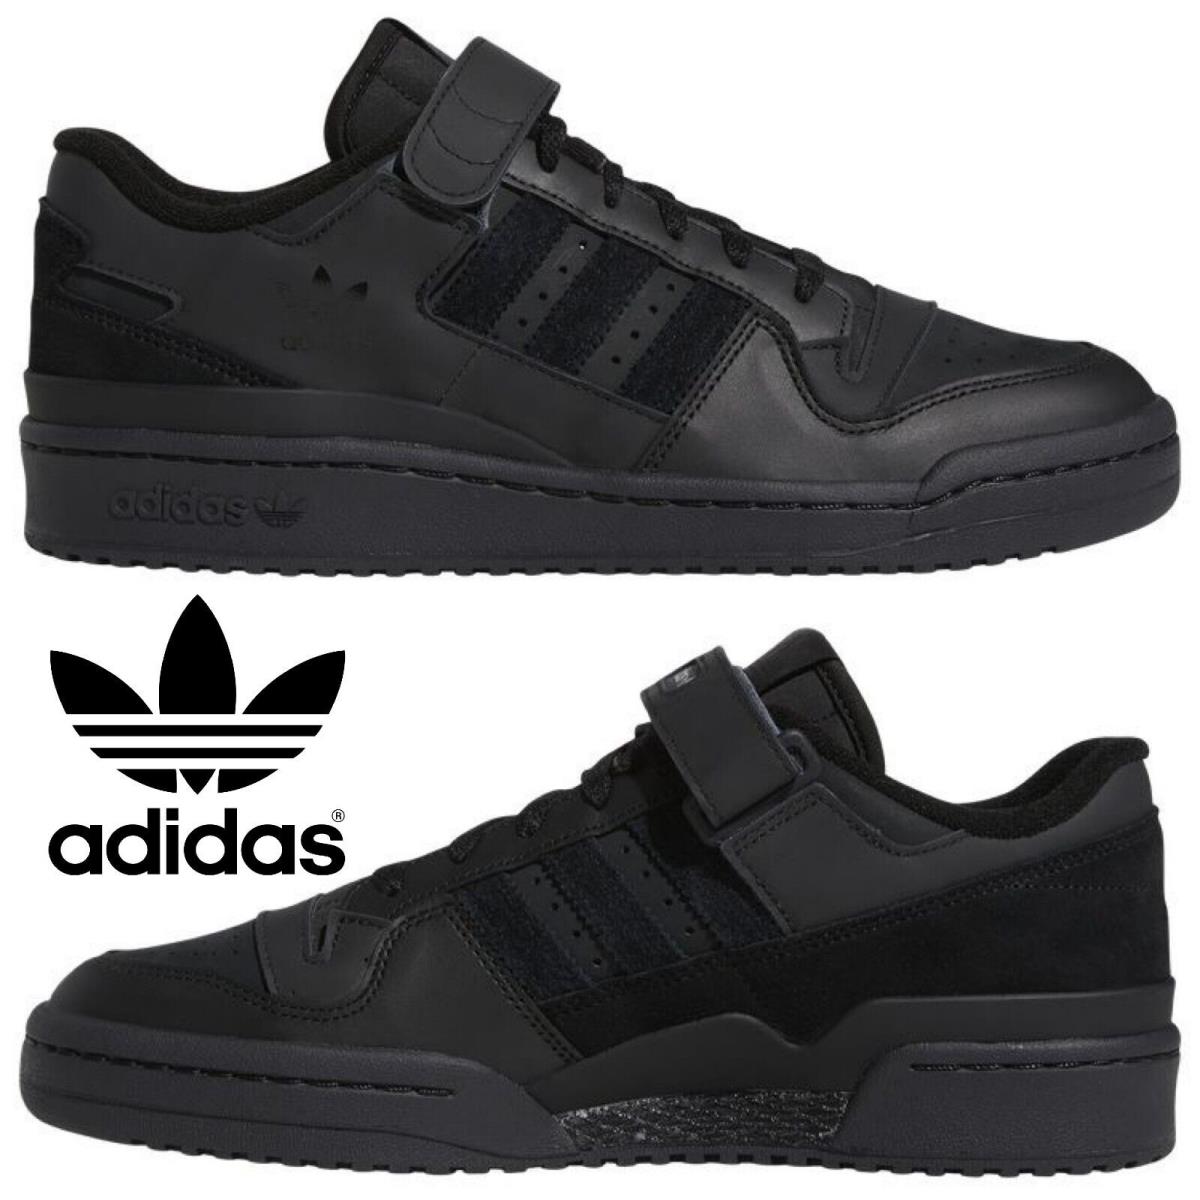 Adidas Originals Forum Low Men`s Sneakers Comfort Sport Casual Shoes Black - Black , Black/Black Manufacturer